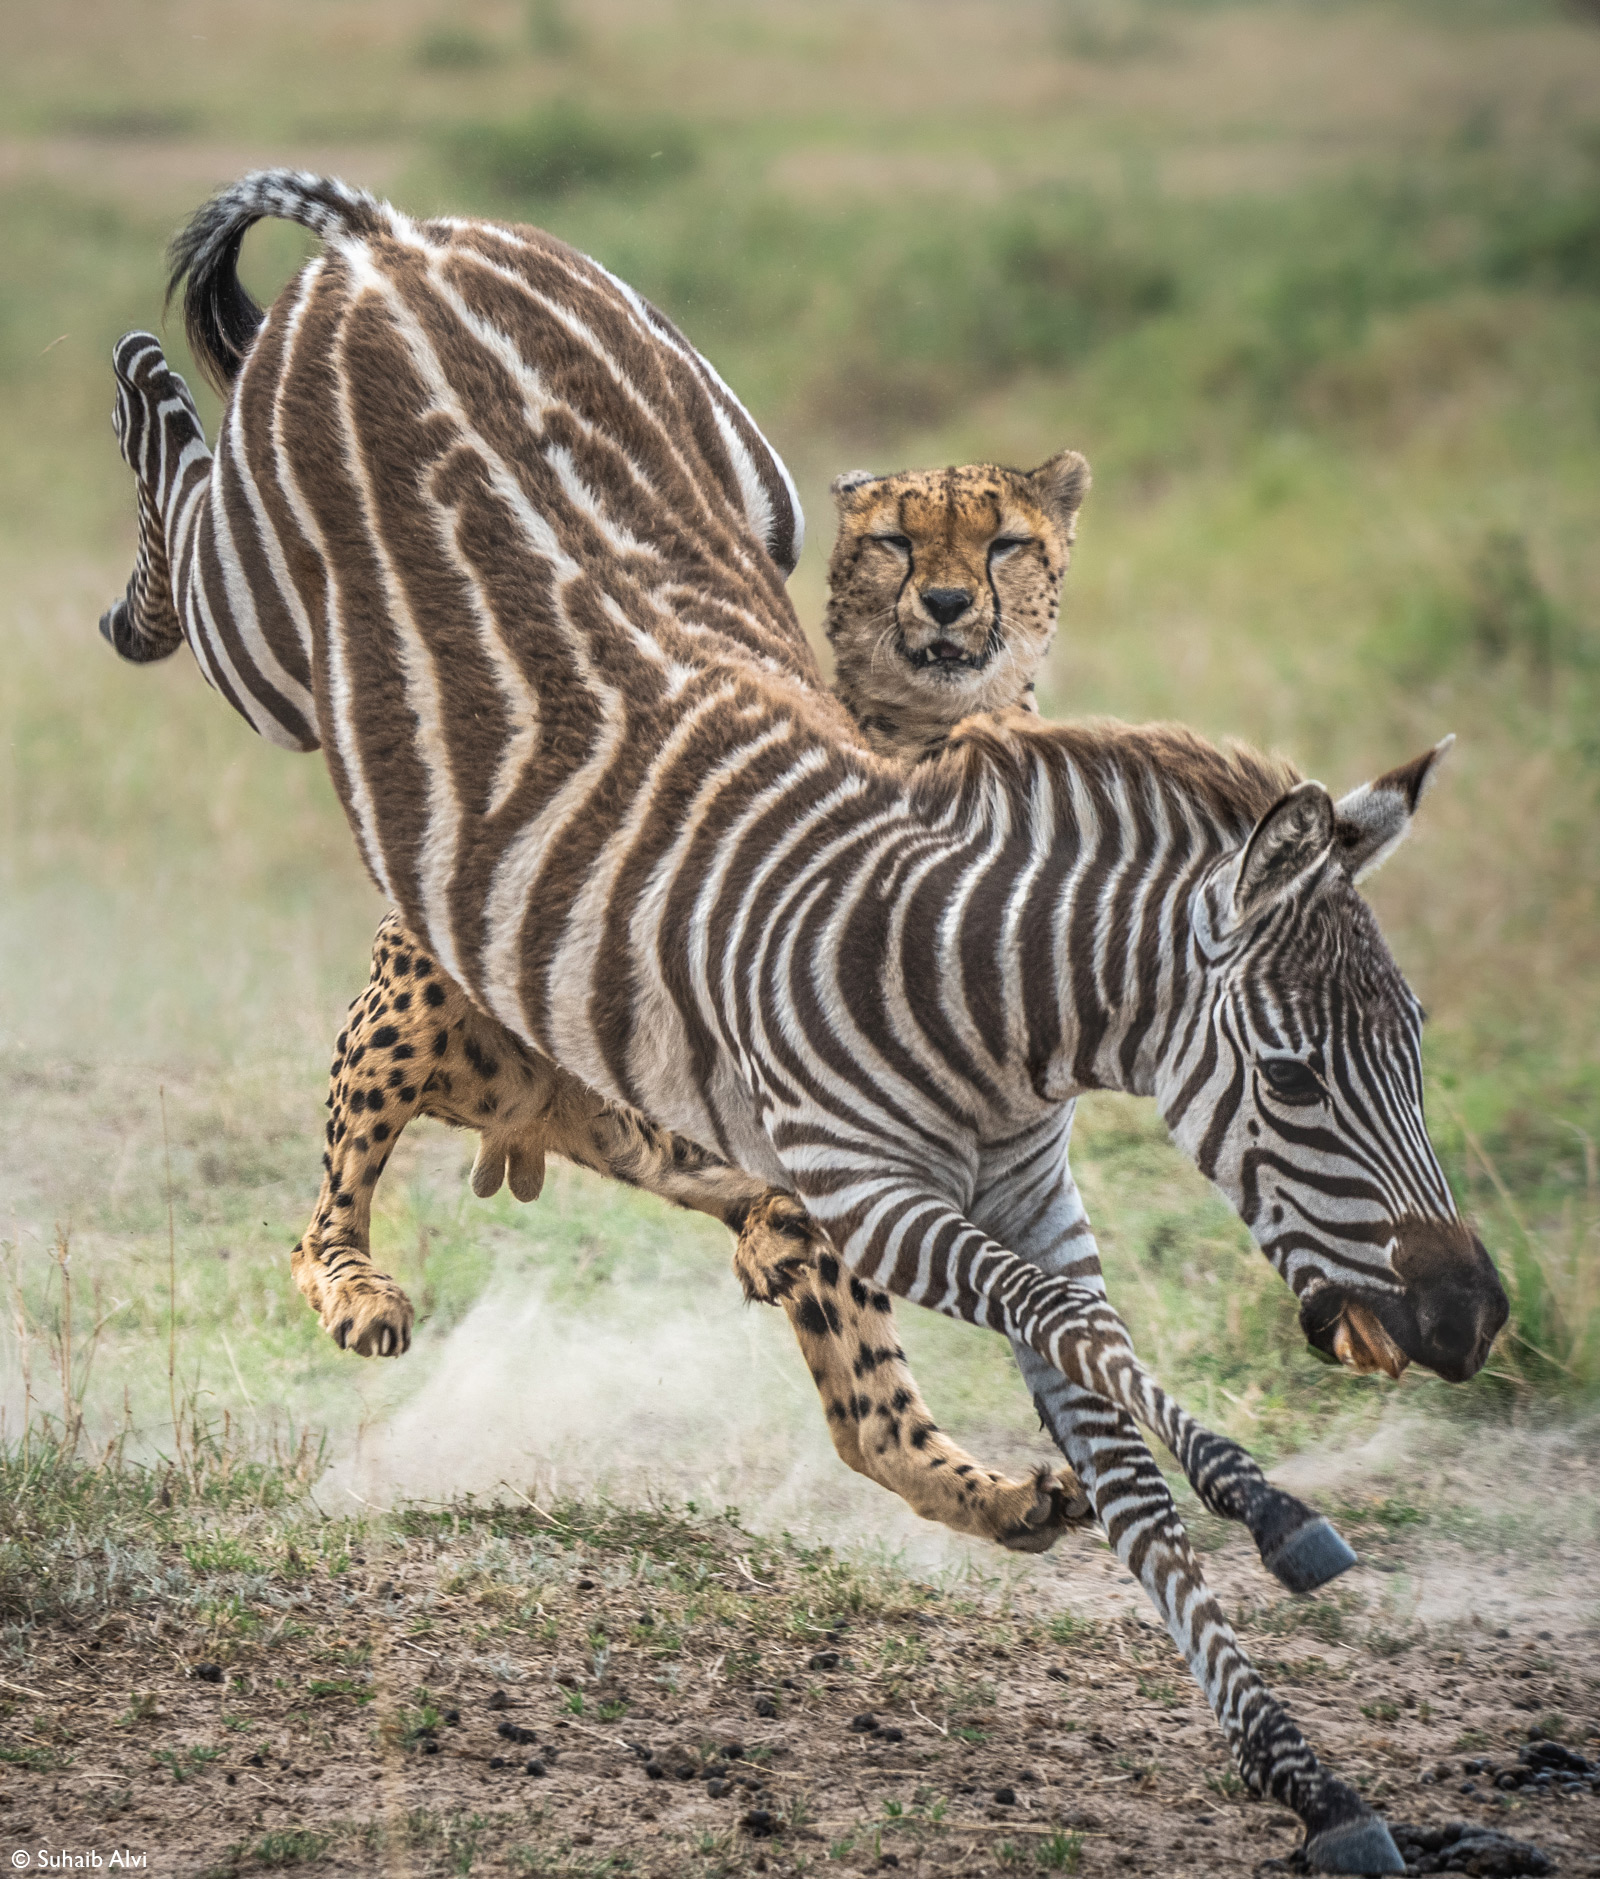 Suhaib-Alvi-fast-five-take-down-zebra-Maasai-Mara-Nation-Reserve-Kenya